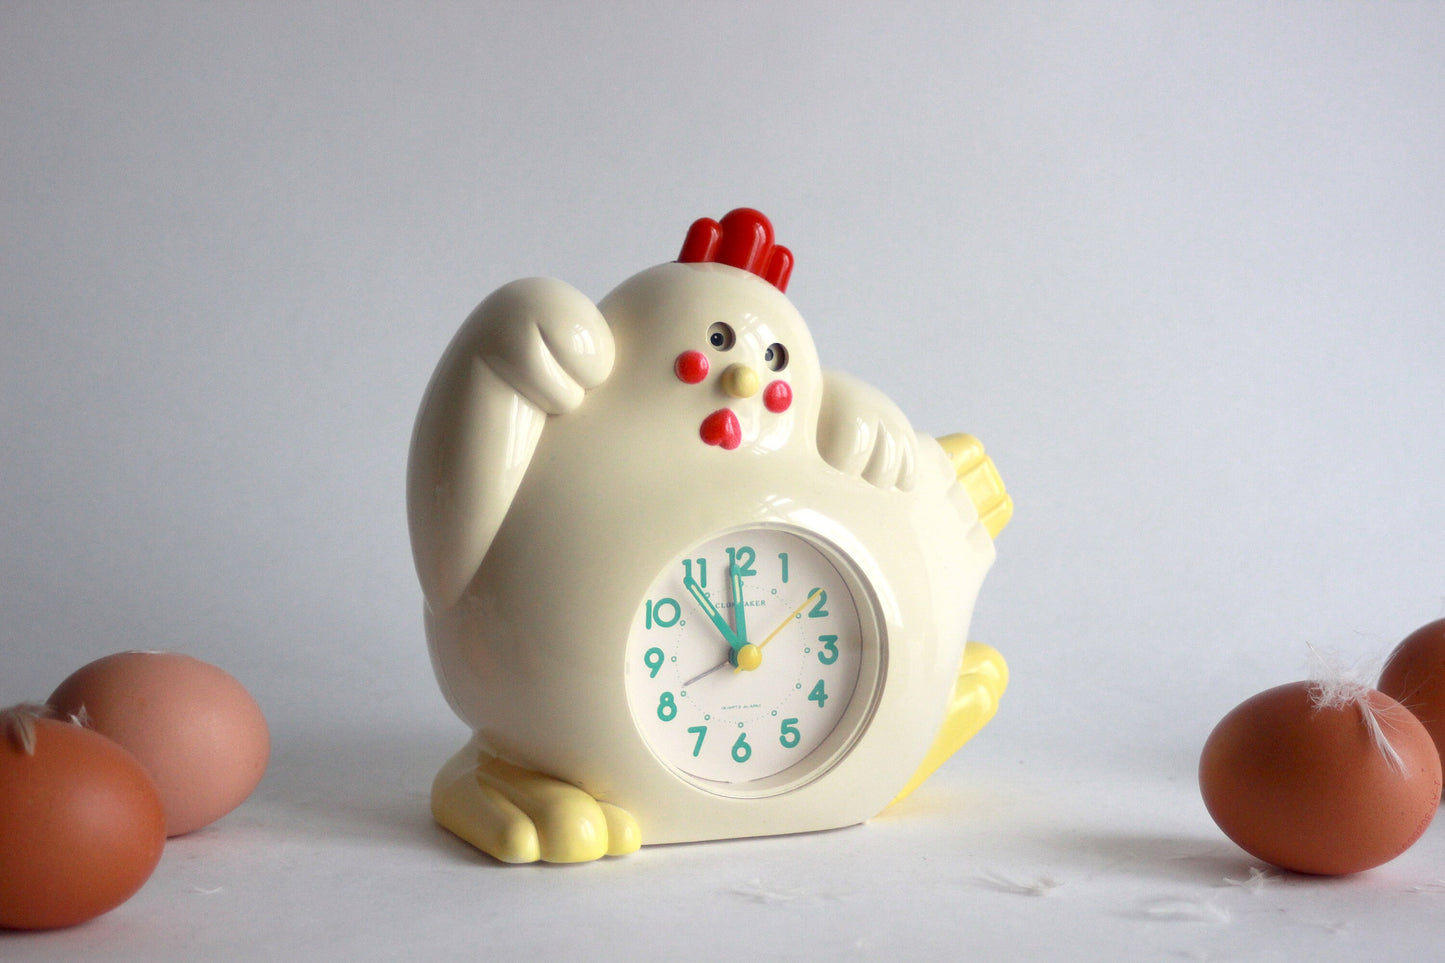 CLOKWAKER rooster shape talking alarm clock. Germany 1980s.